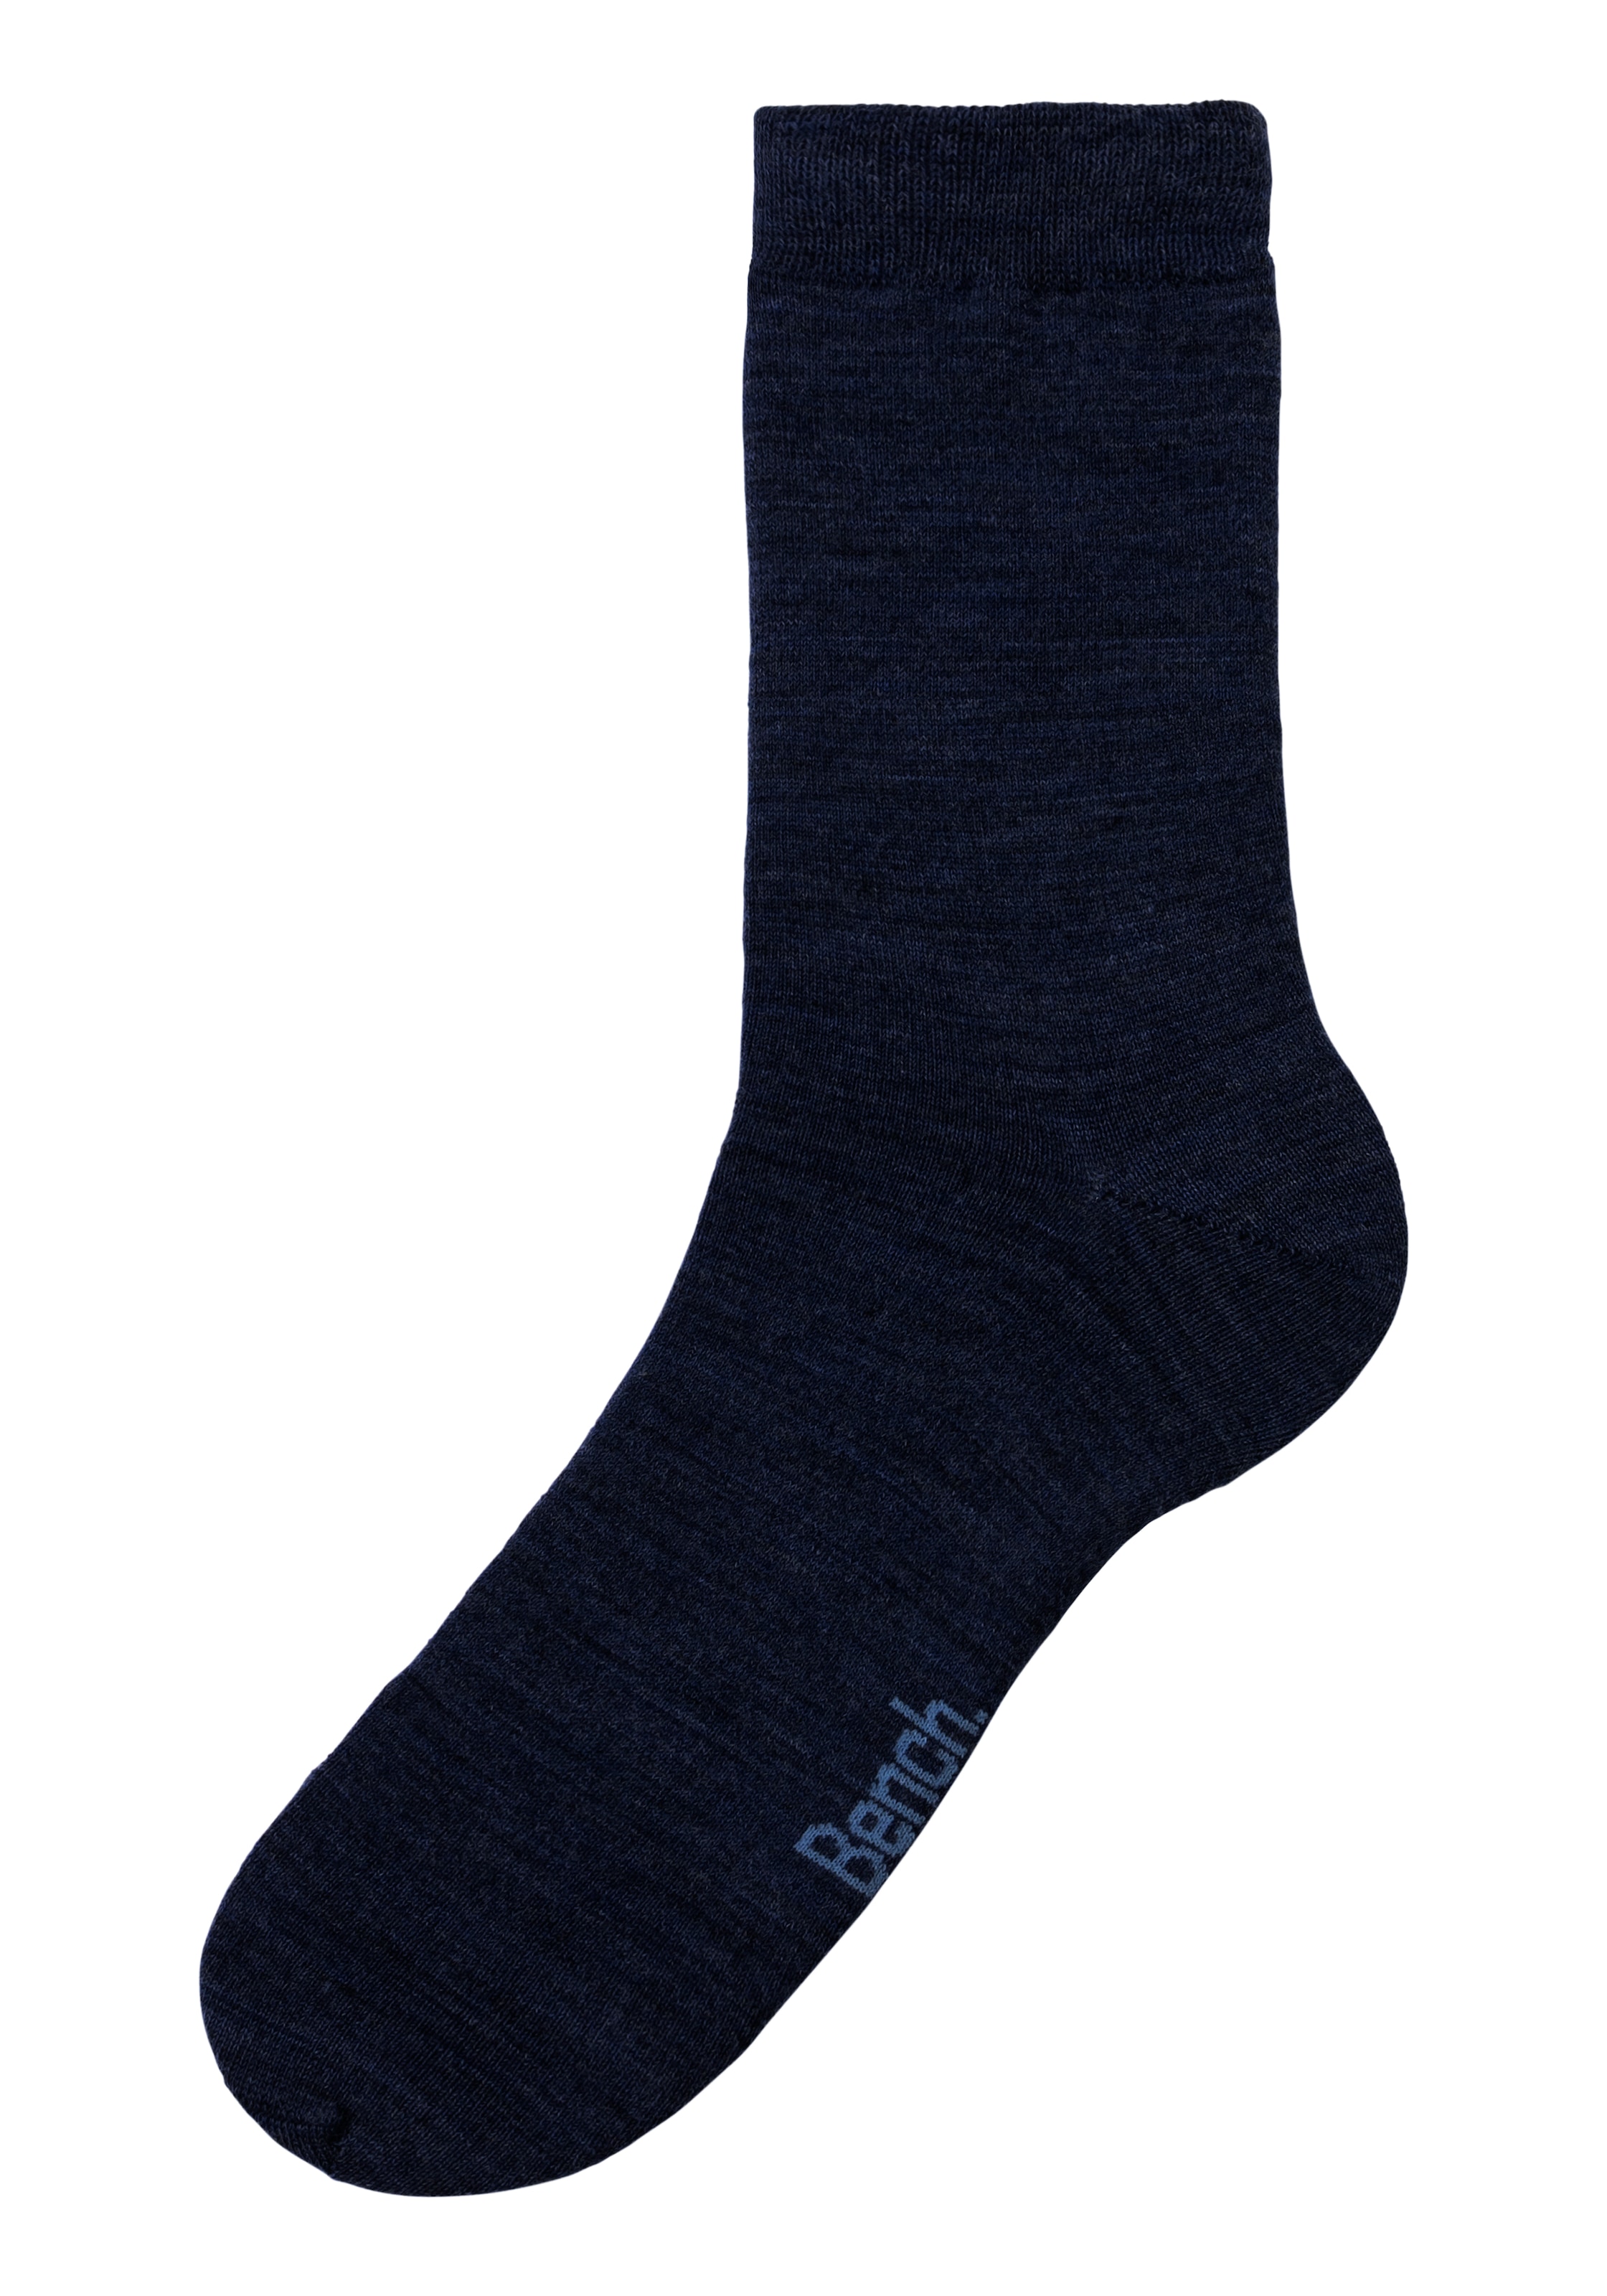 LASCANA flauschigem (3 Bademode, | » online aus Lingerie Paar), & Bench. Unterwäsche Material kaufen Wollsocken Socken,